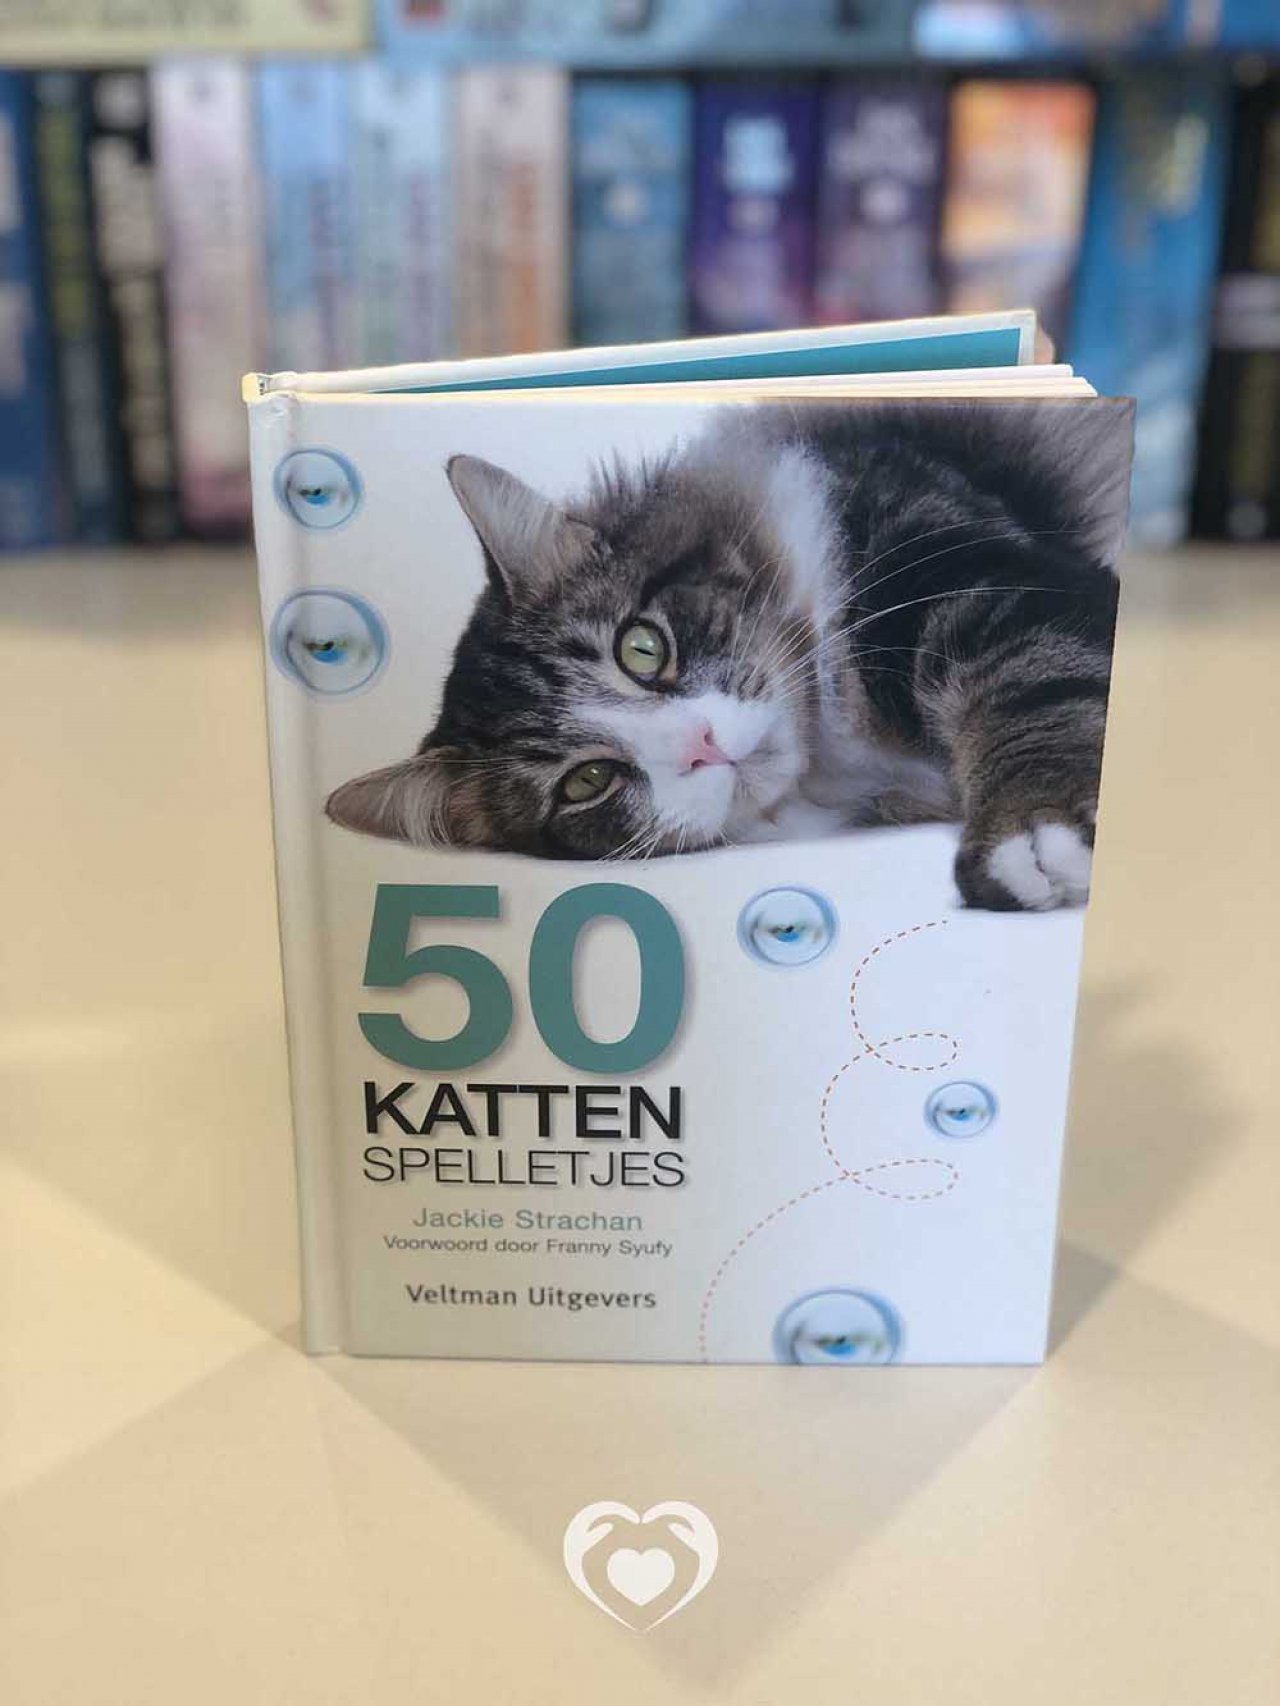 goud Gevoelig leveren 50 kattenspelletjes - Jackie Strachan - boek 2ehands | nofam.org